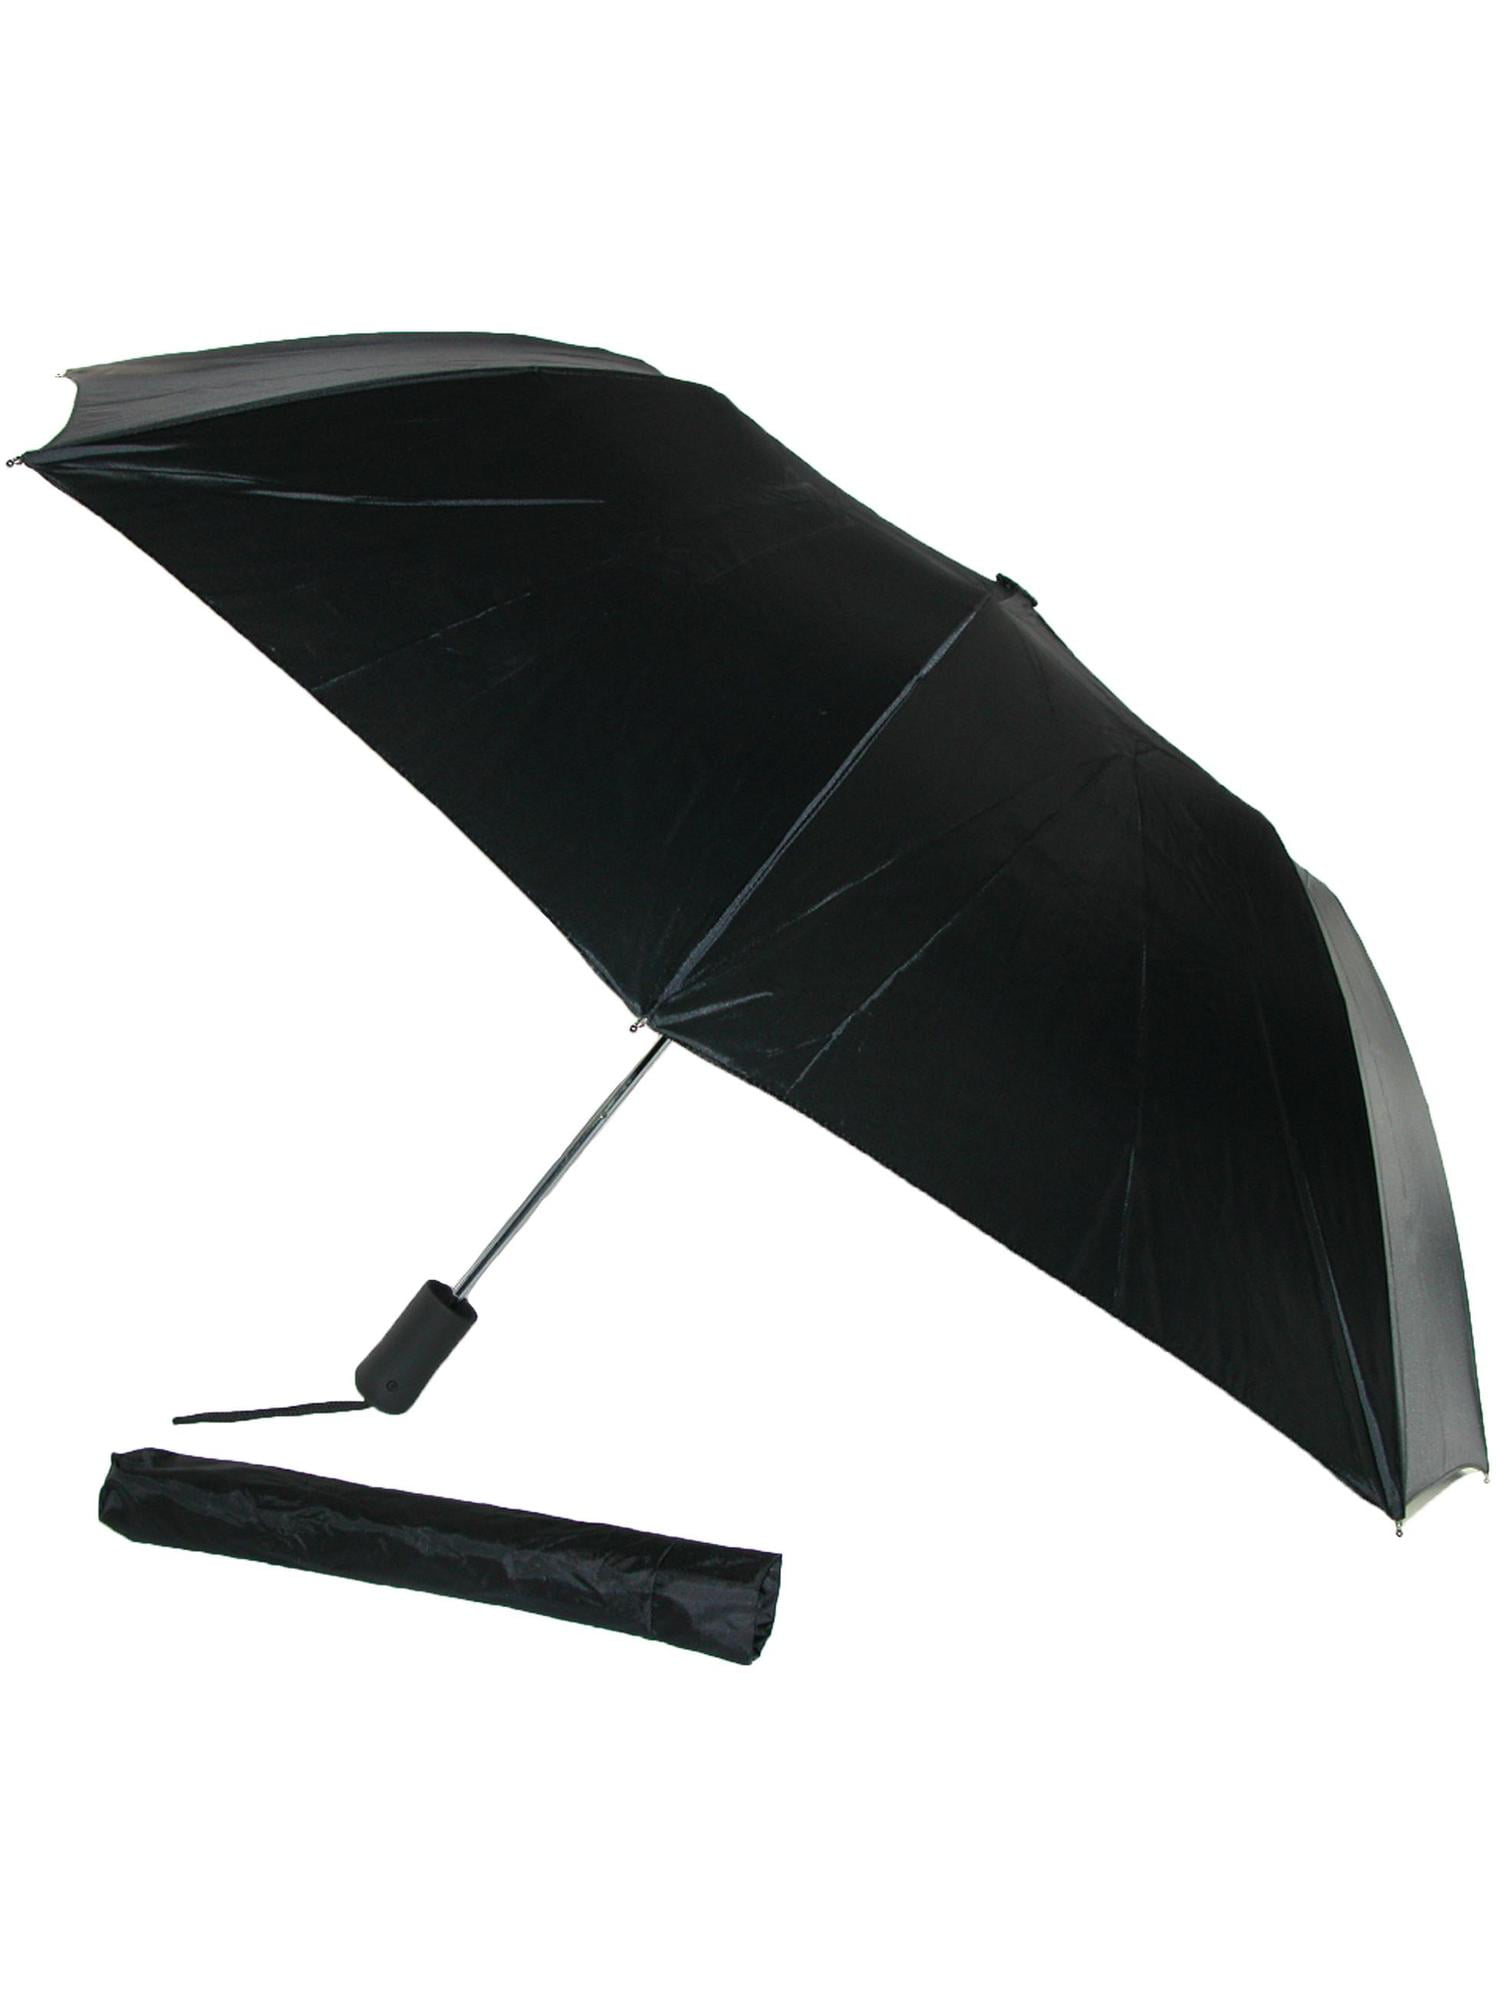 It Was All A Dream Automatic Umbrella Auto Open Close Folding Windproof Foldable For Men Women Kids